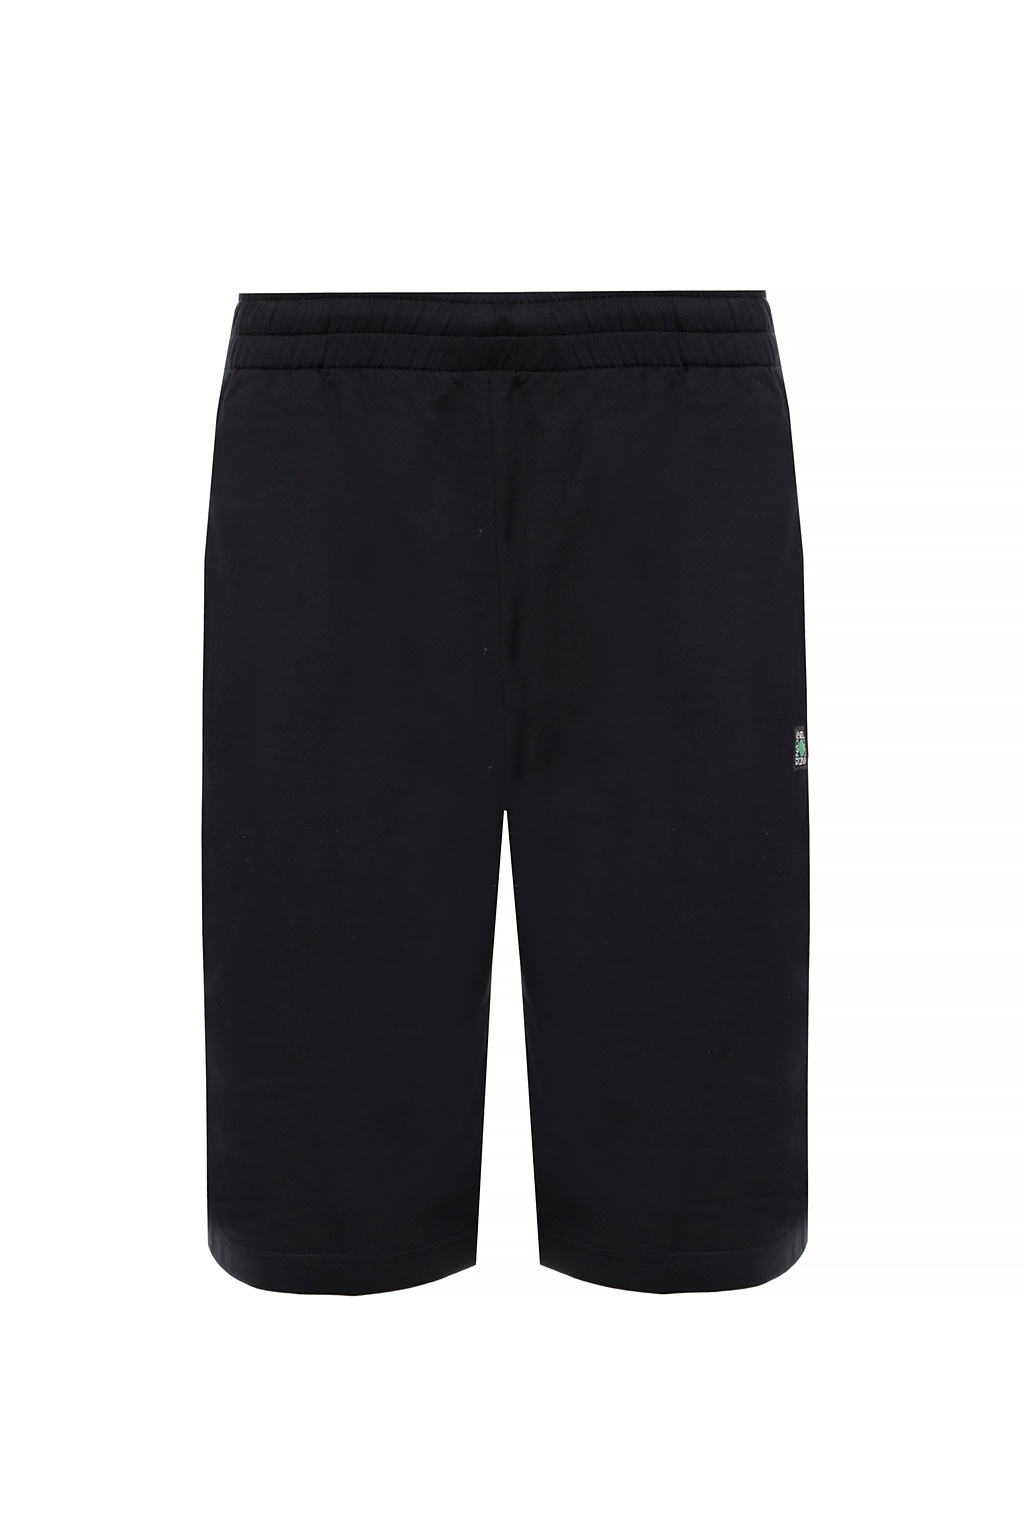 Branded sweat shorts Kenzo - Vitkac HK